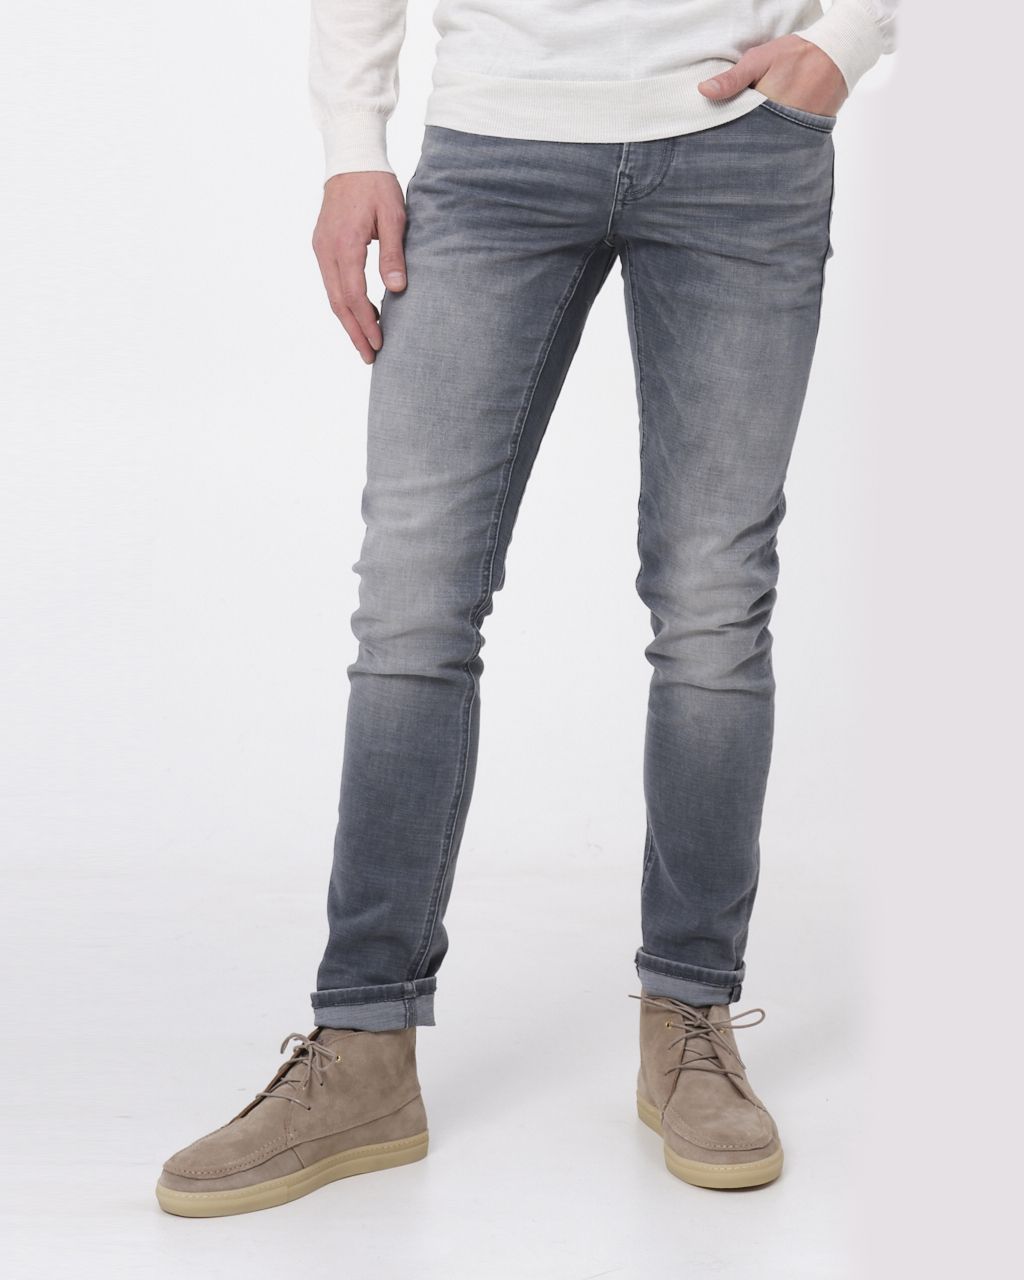 PME Legend Tailwheel Jeans | Shop nu - Only for Men